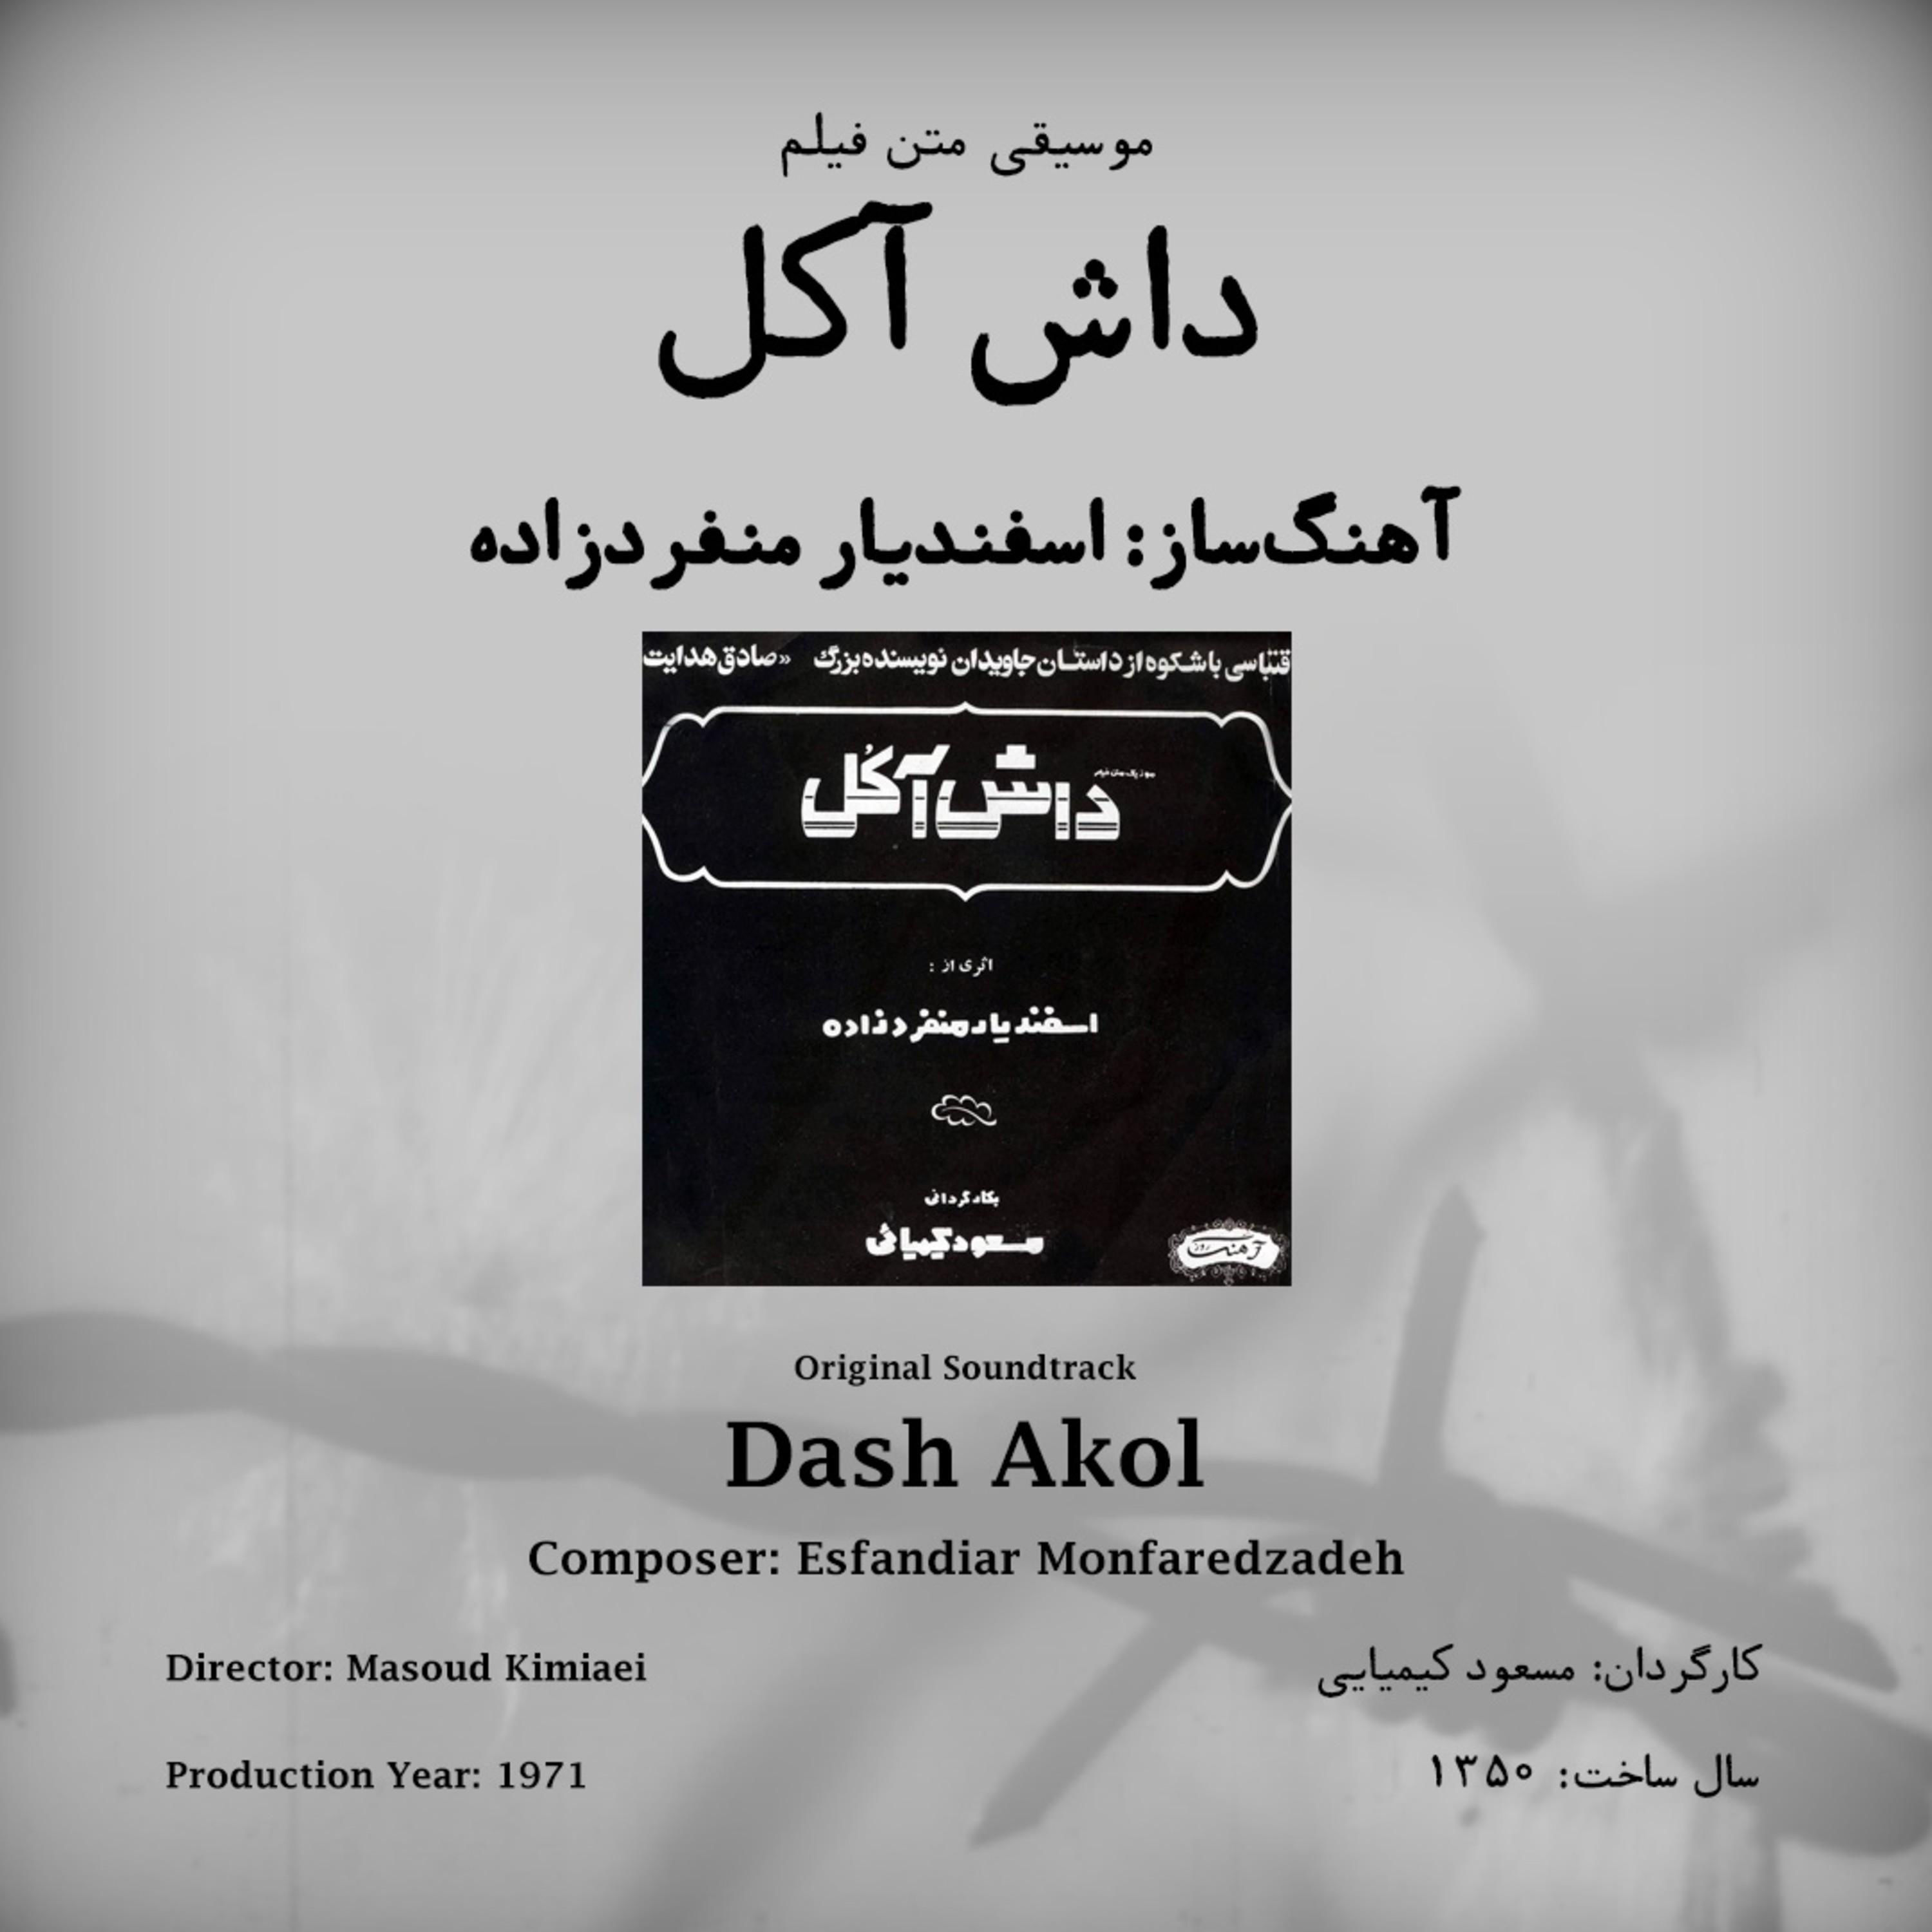 Dash akol (1971). Аколь. Music "1971 year Art". Dash soundtrack